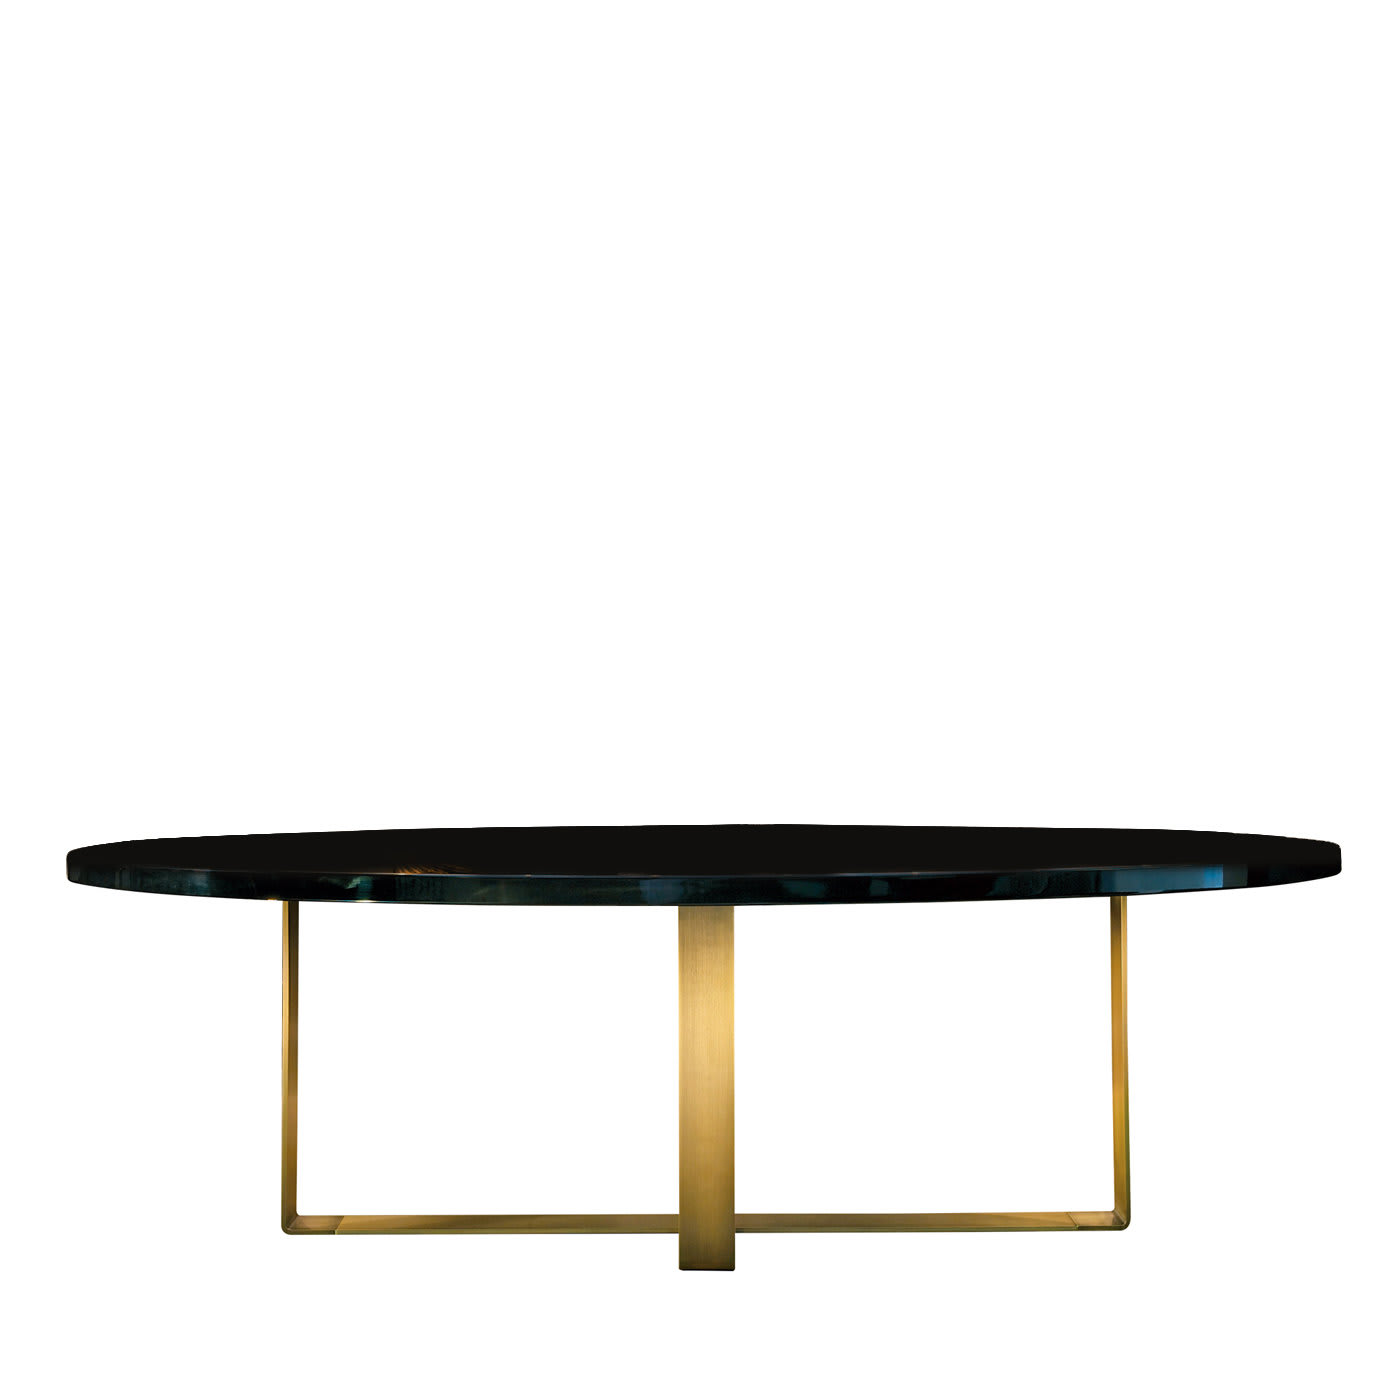 Pierre Oval Dining Table - DOM Edizioni